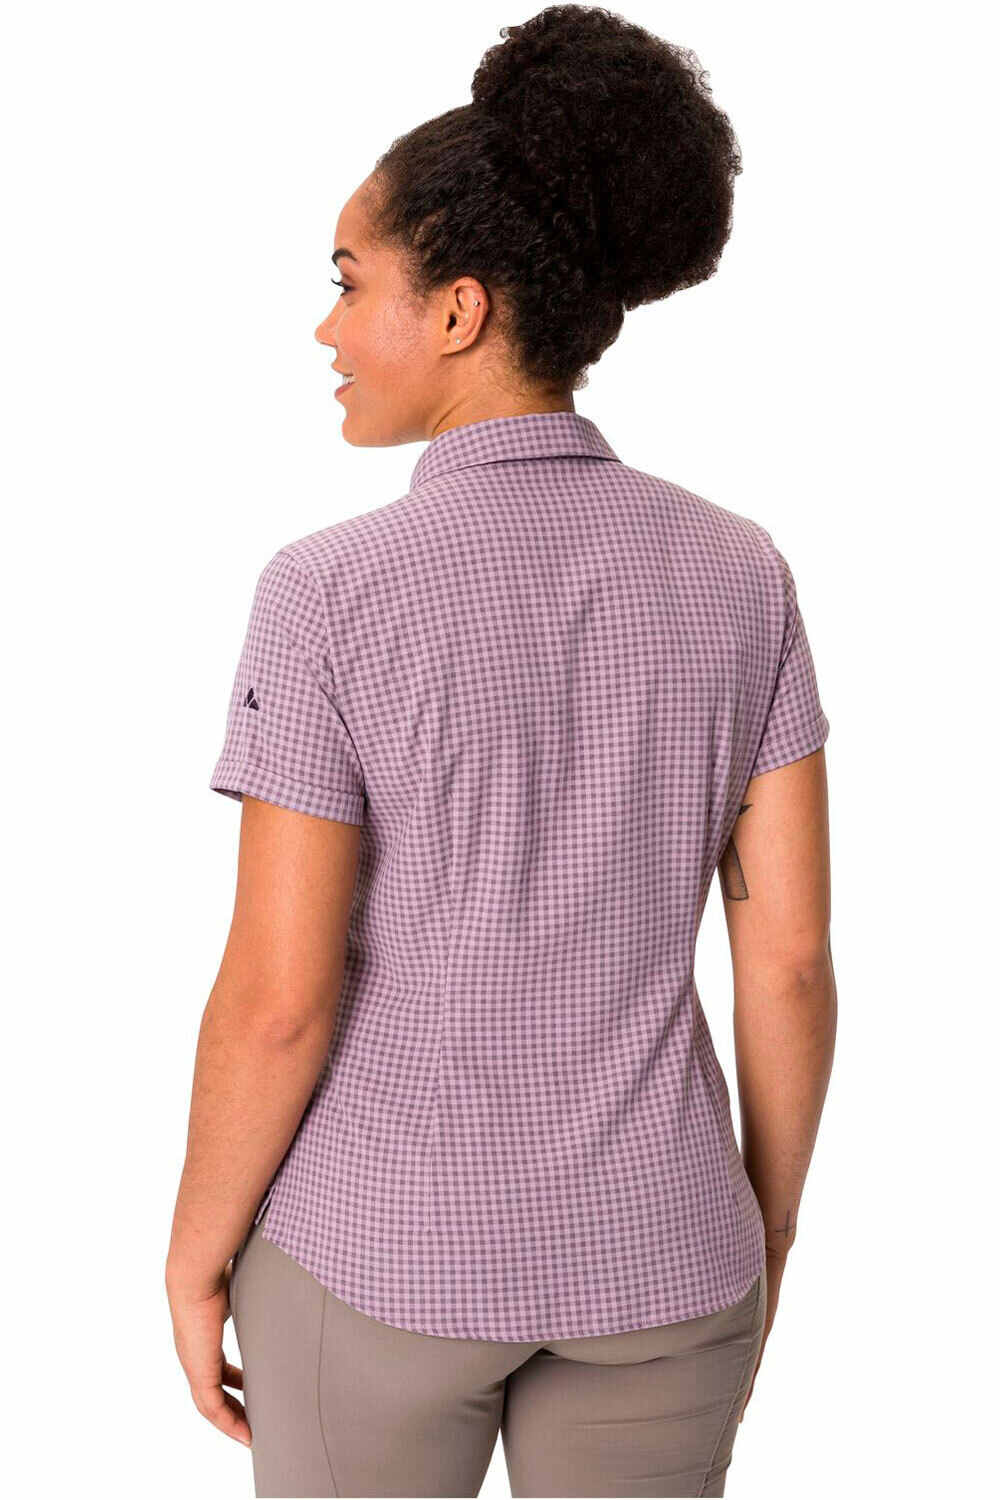 Vaude camisa montaña manga corta mujer Women  s Seiland Shirt III vista trasera